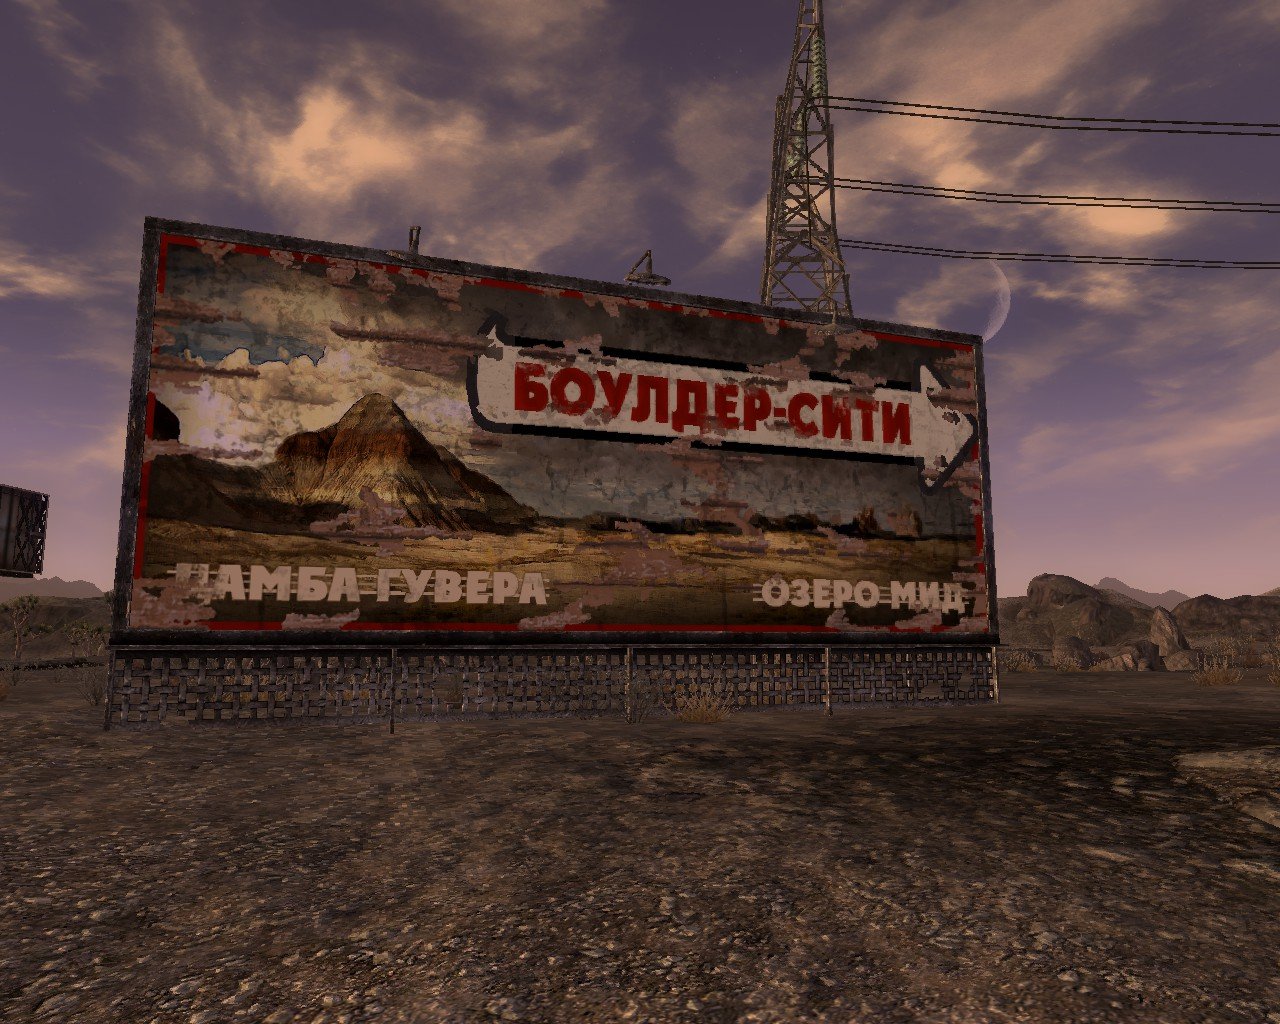 New vegas текстуры. Fallout New Vegas билборды. Вывески Fallout New Vegas. Загрузочный экран фоллаут Нью Вегас. Текстура Fallout.